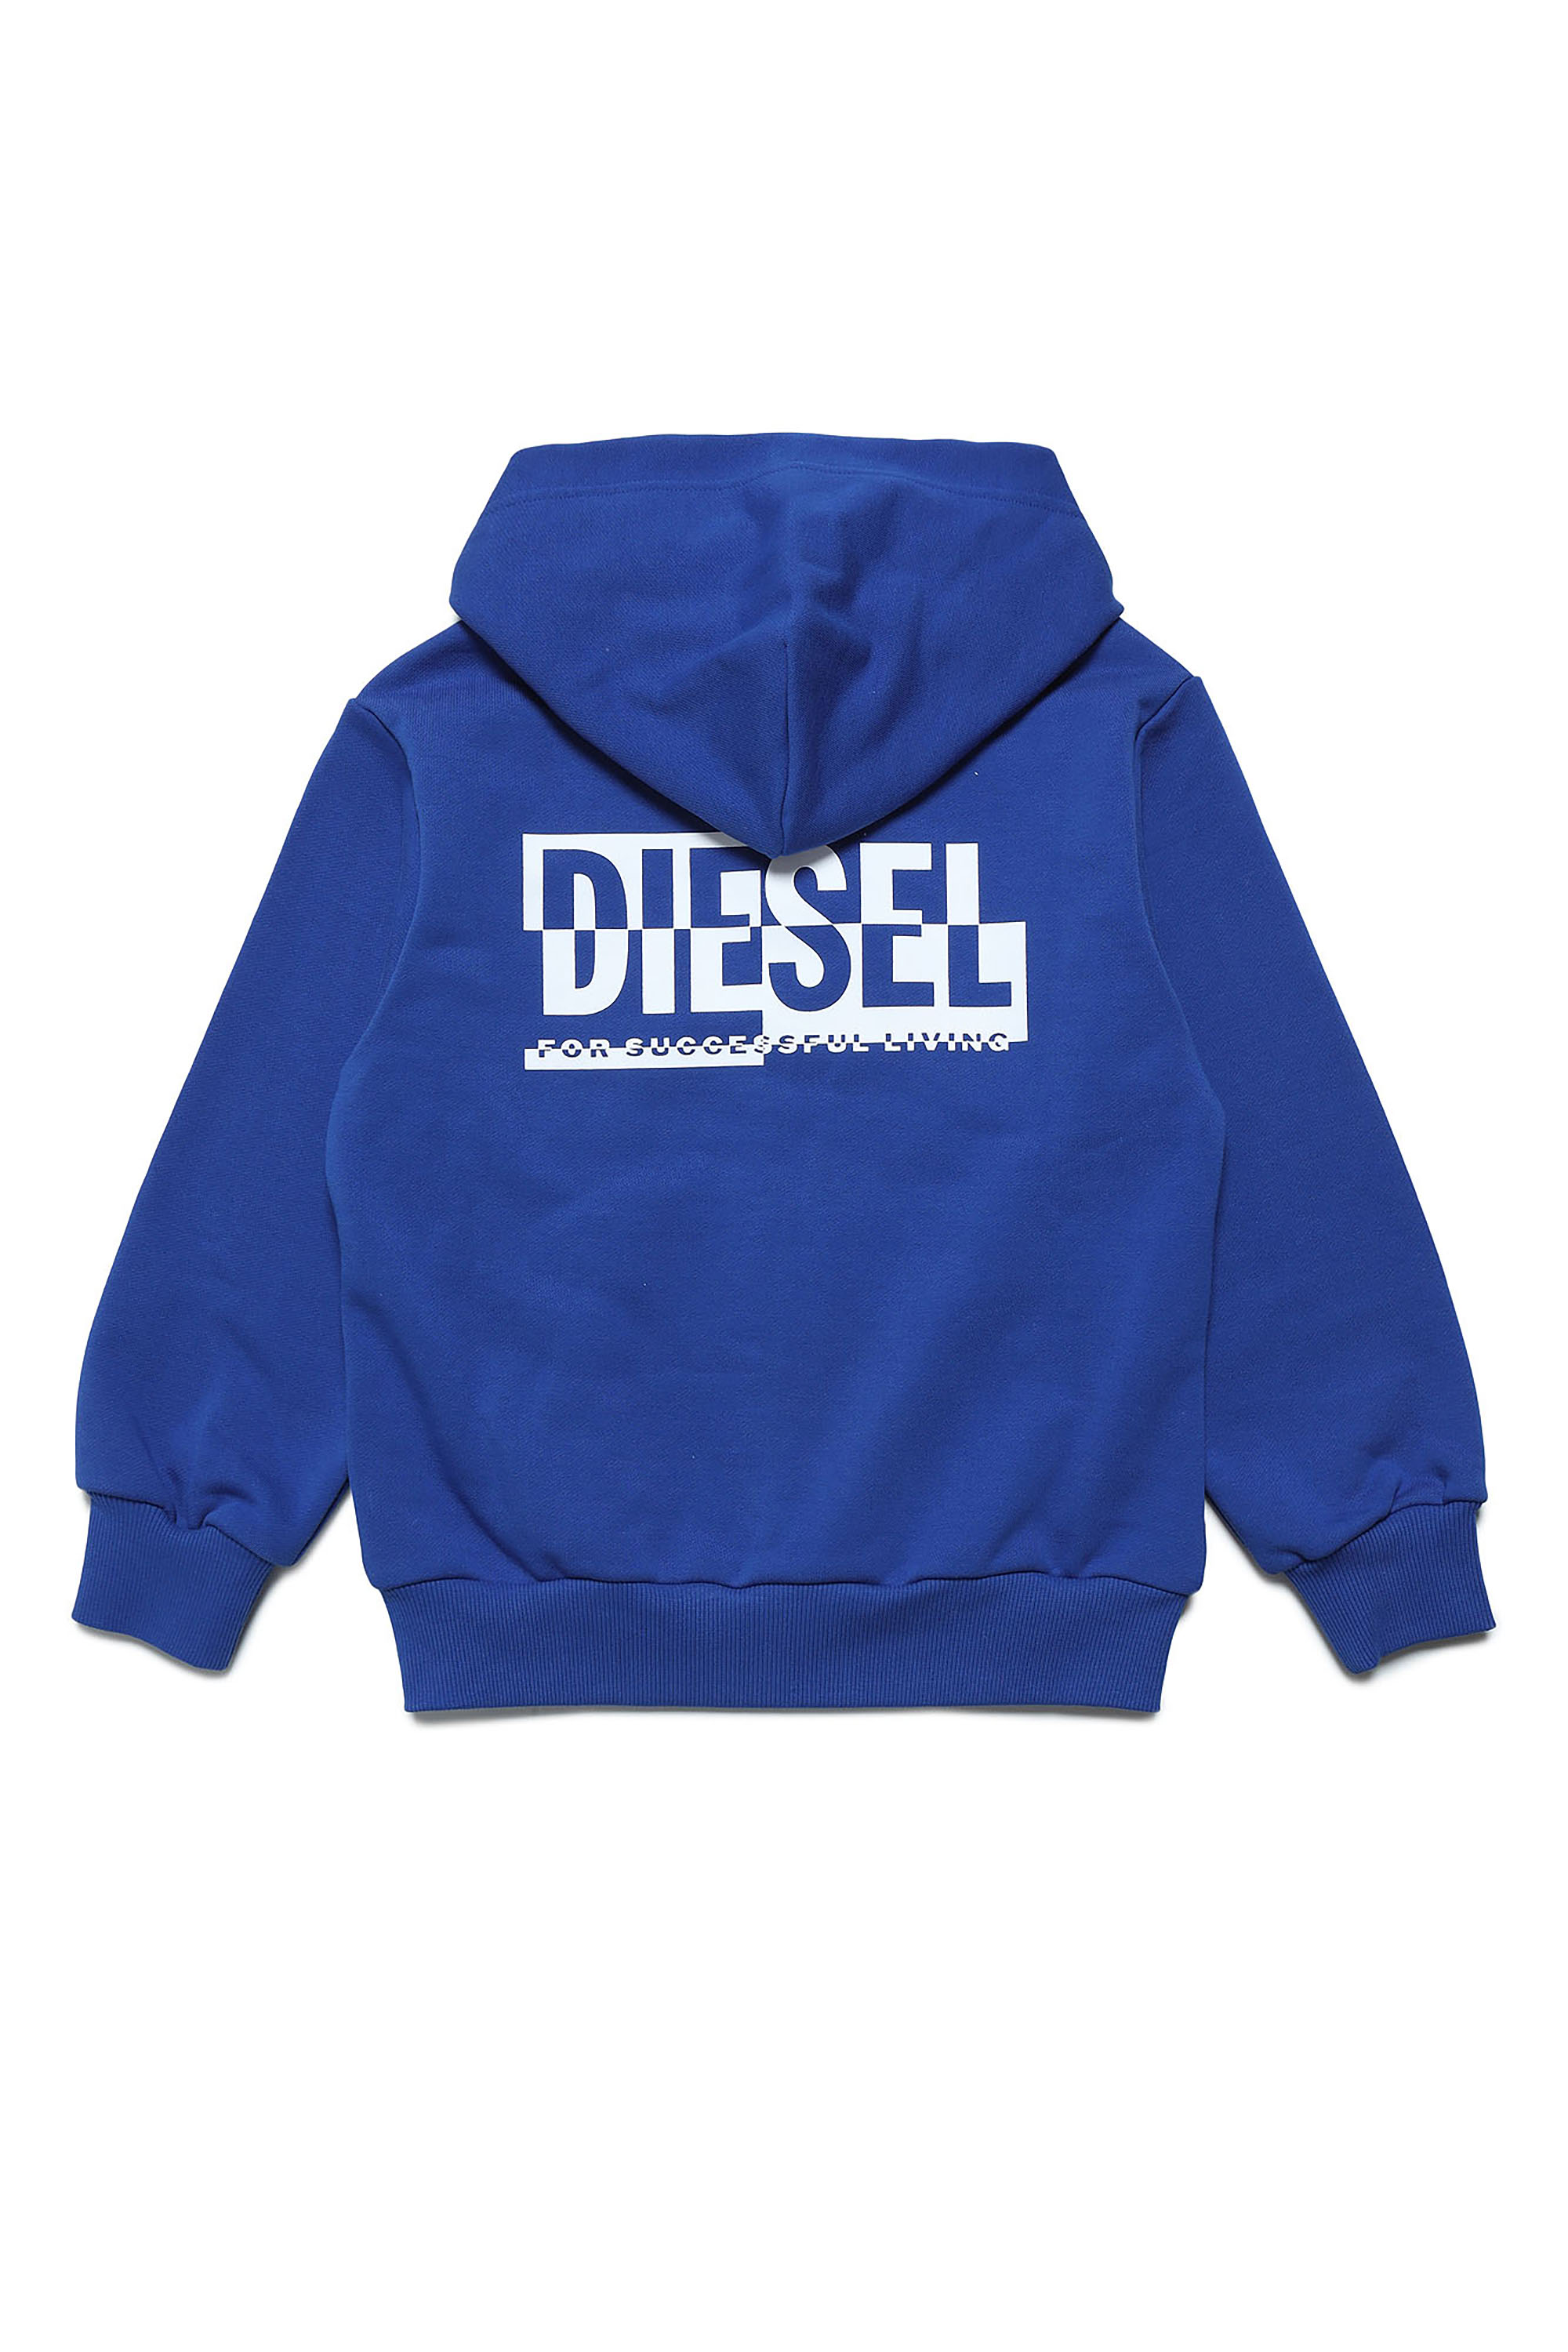 Diesel - SPONE OVER, ブルー - Image 2